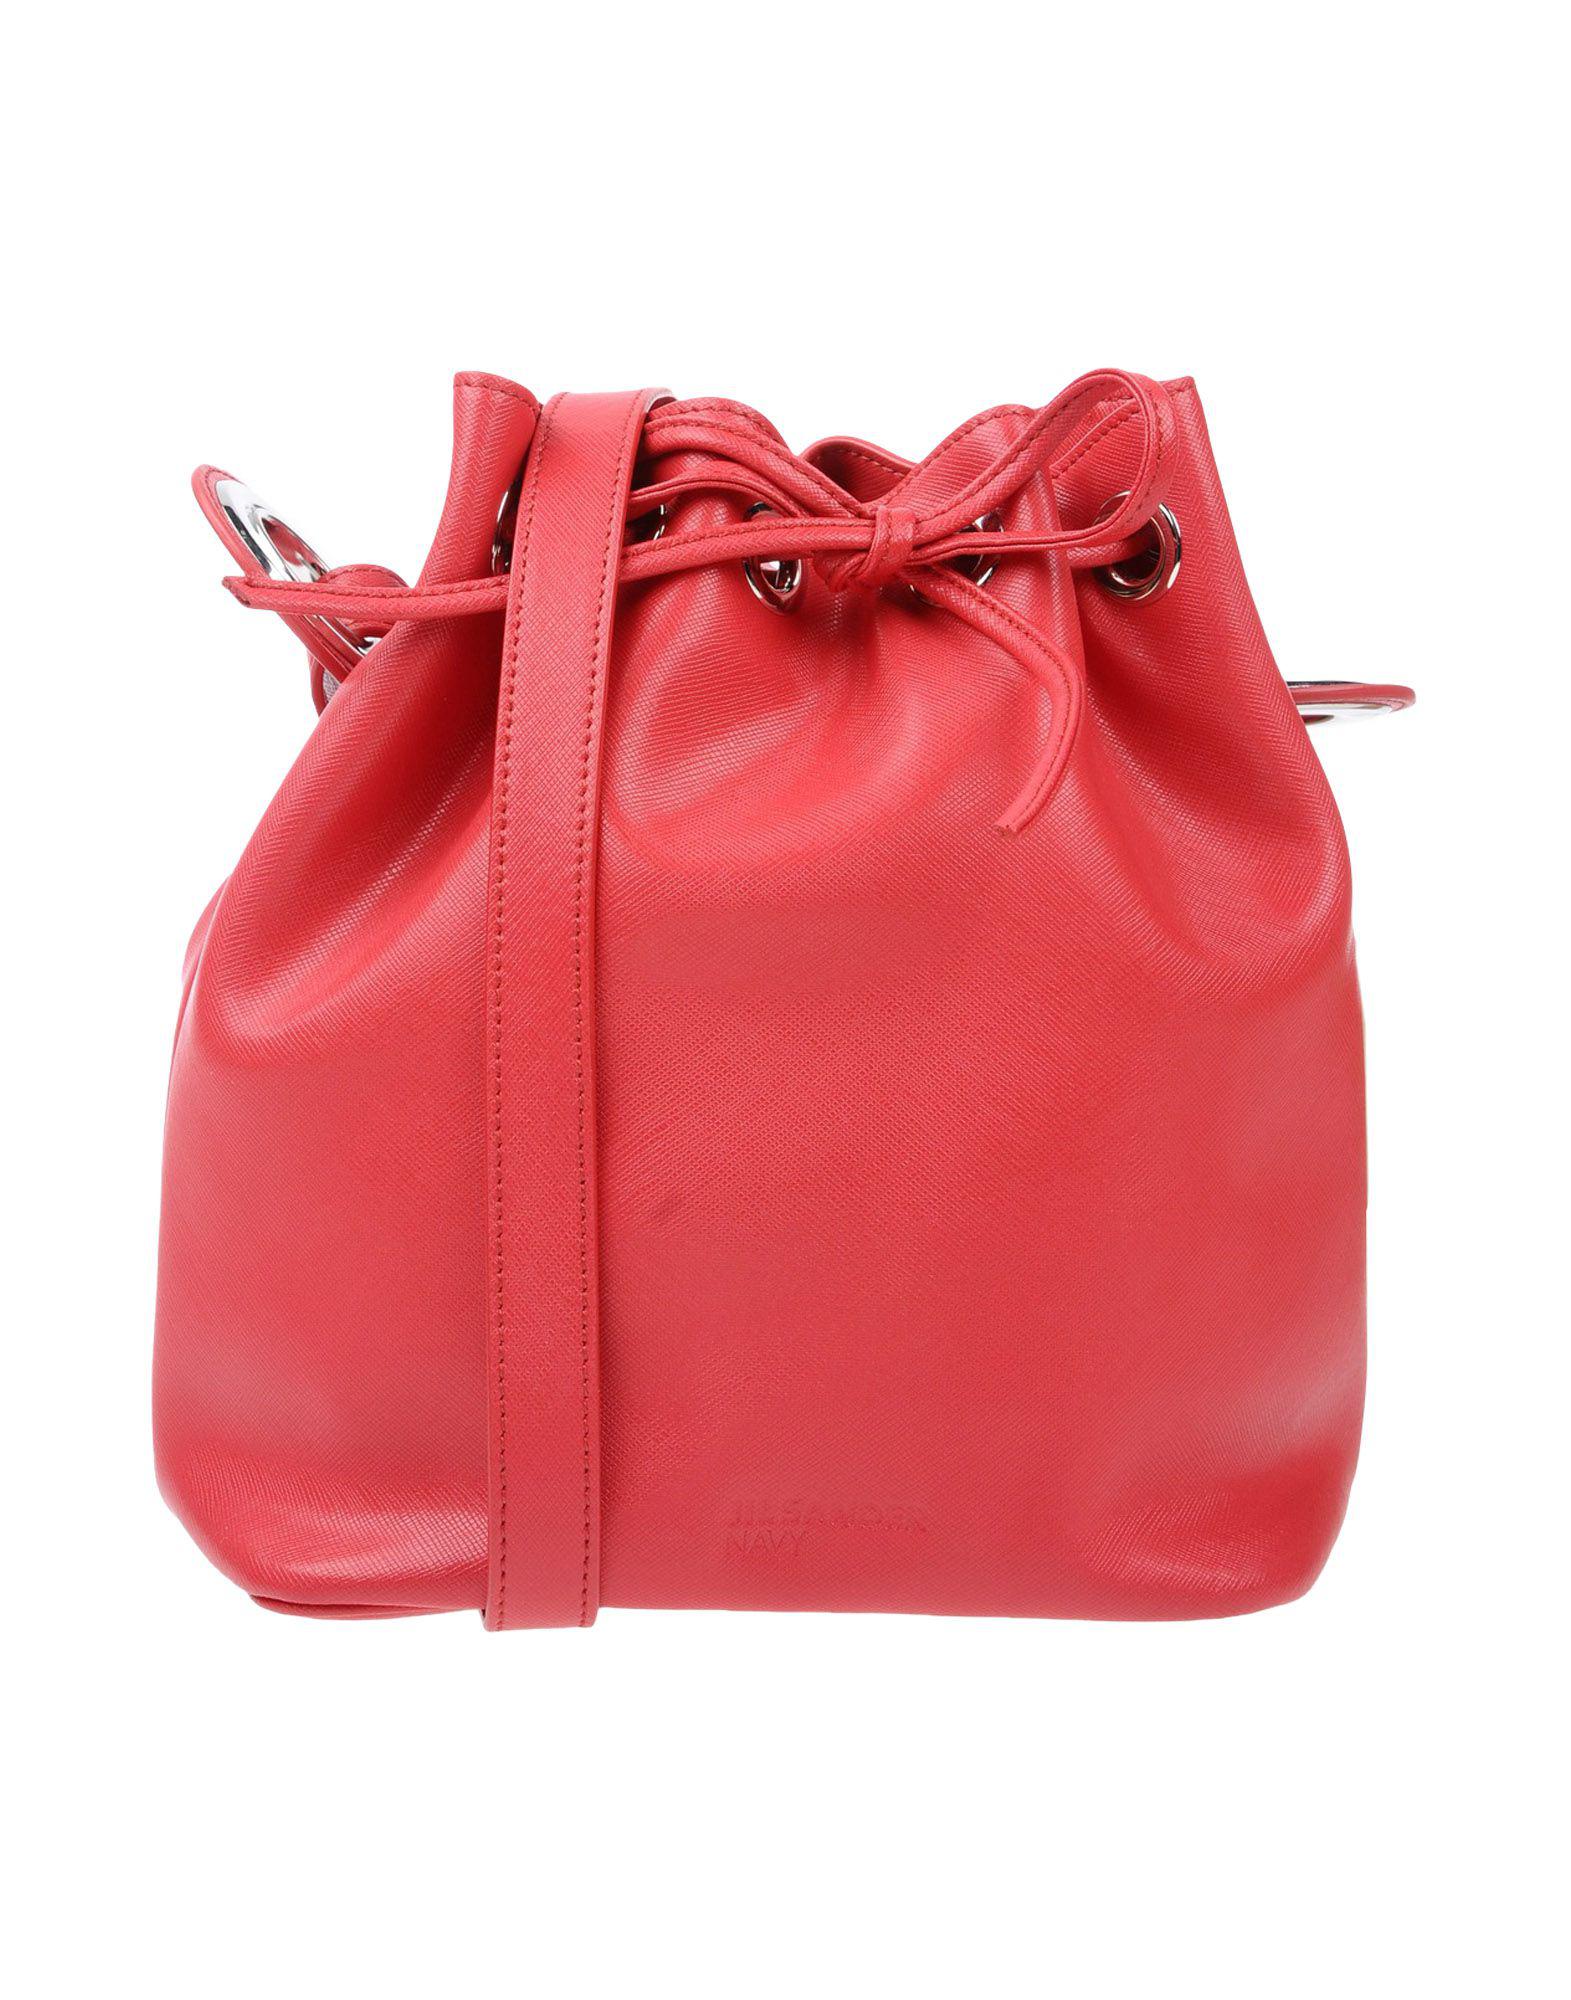 Lyst - Jil Sander Navy Shoulder Bags in Red